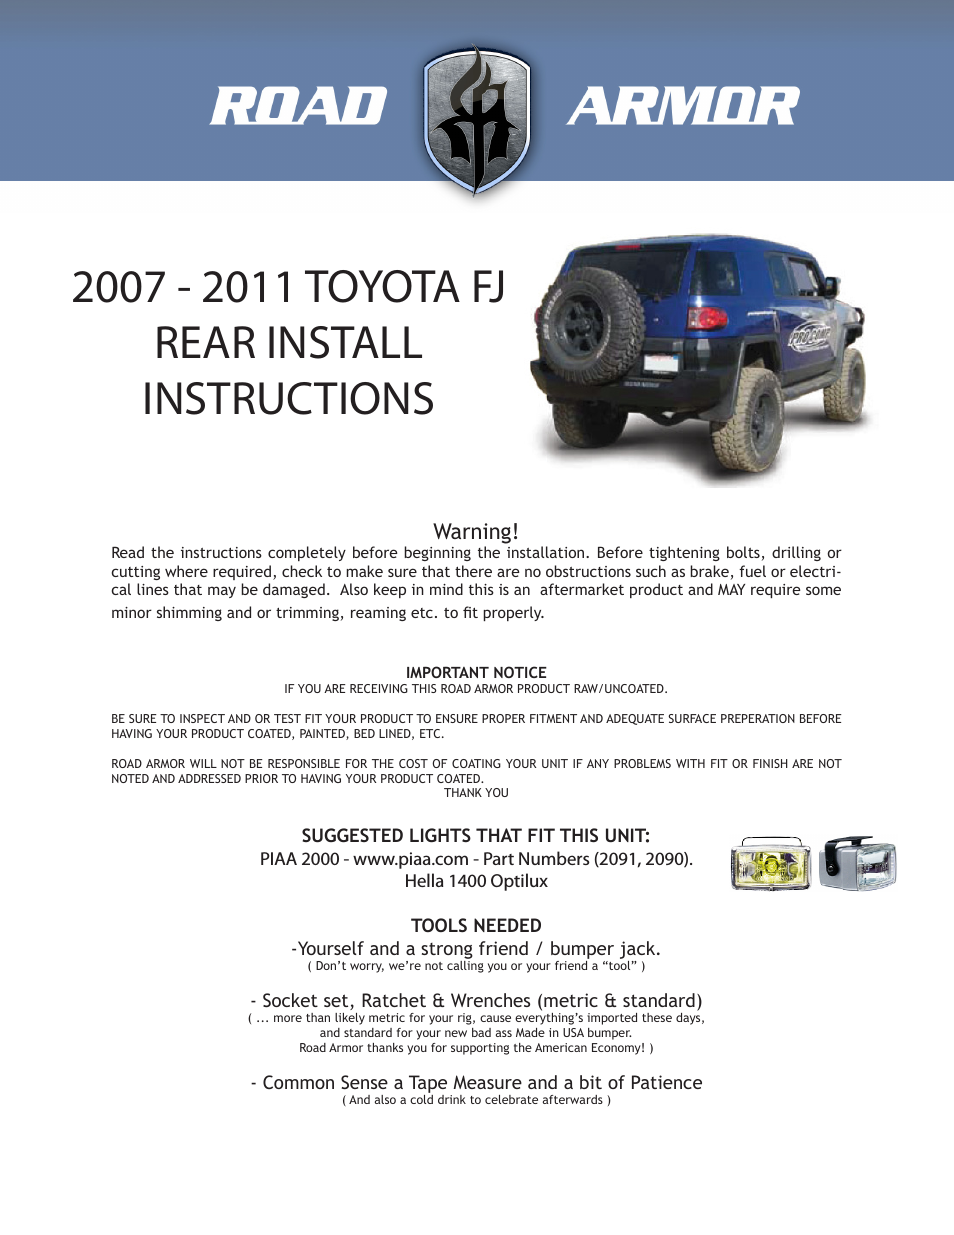 2007-2011 Toyota FJ Rear Bumper